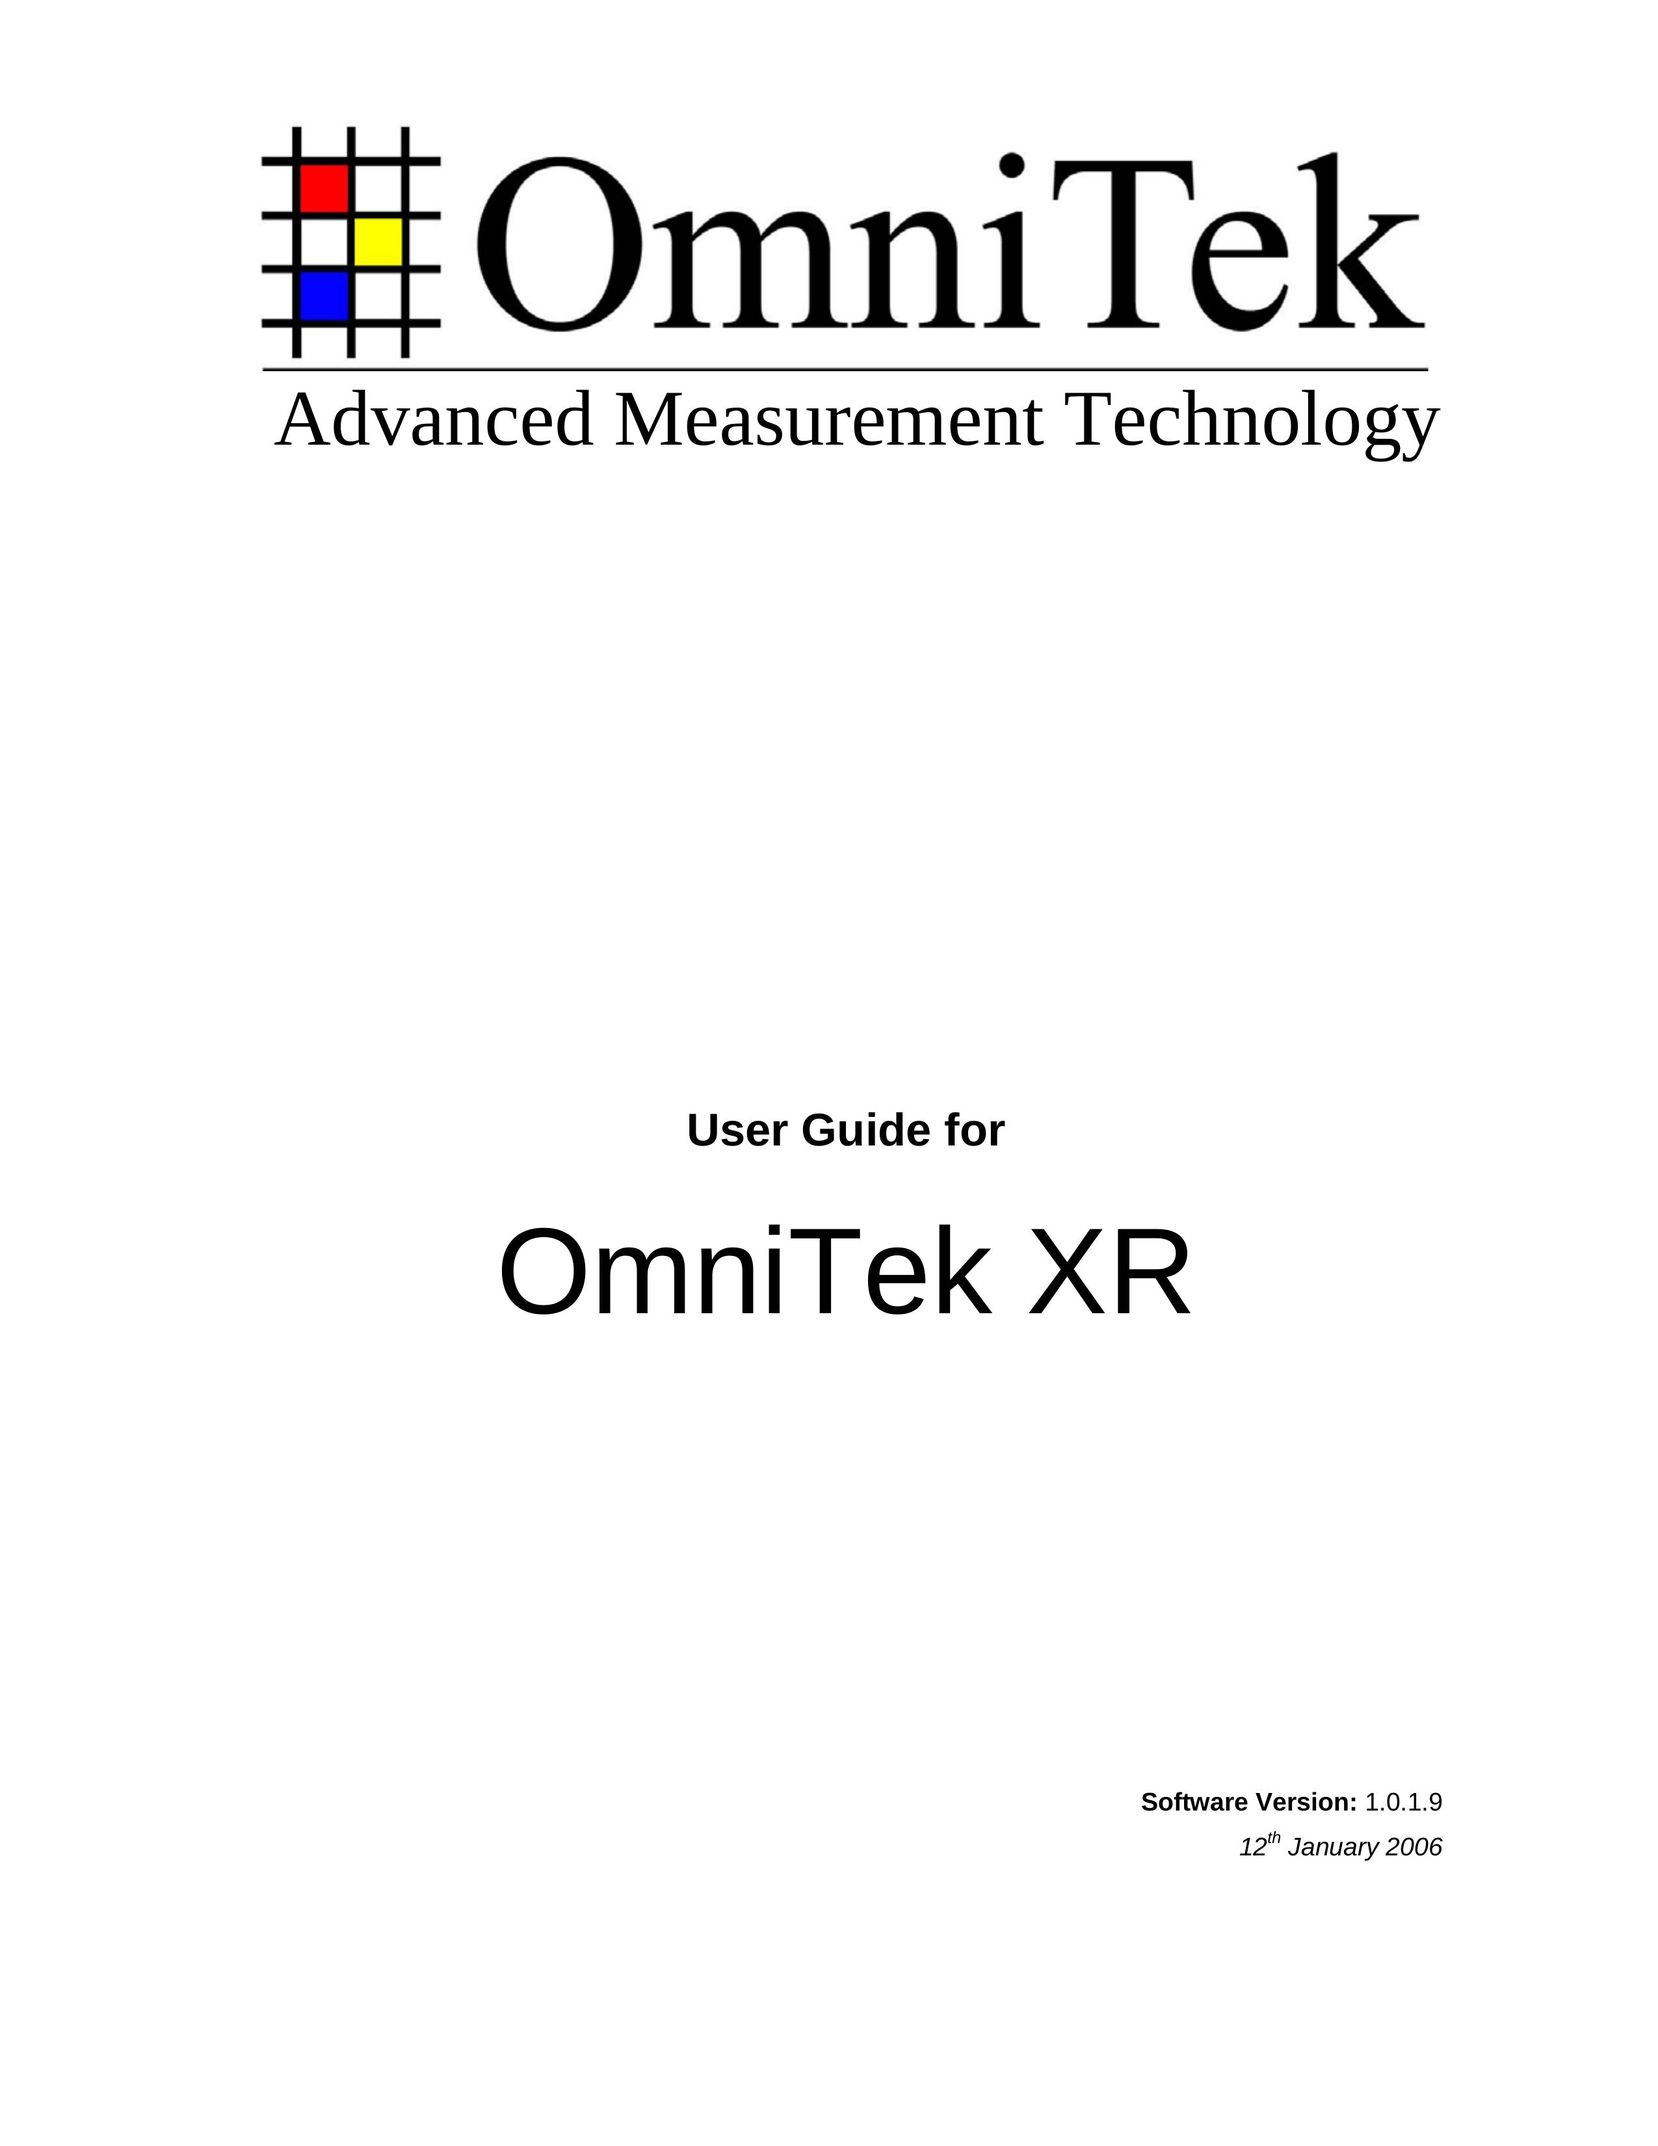 OmniTek OmniTek XR Frozen Dessert Maker User Manual